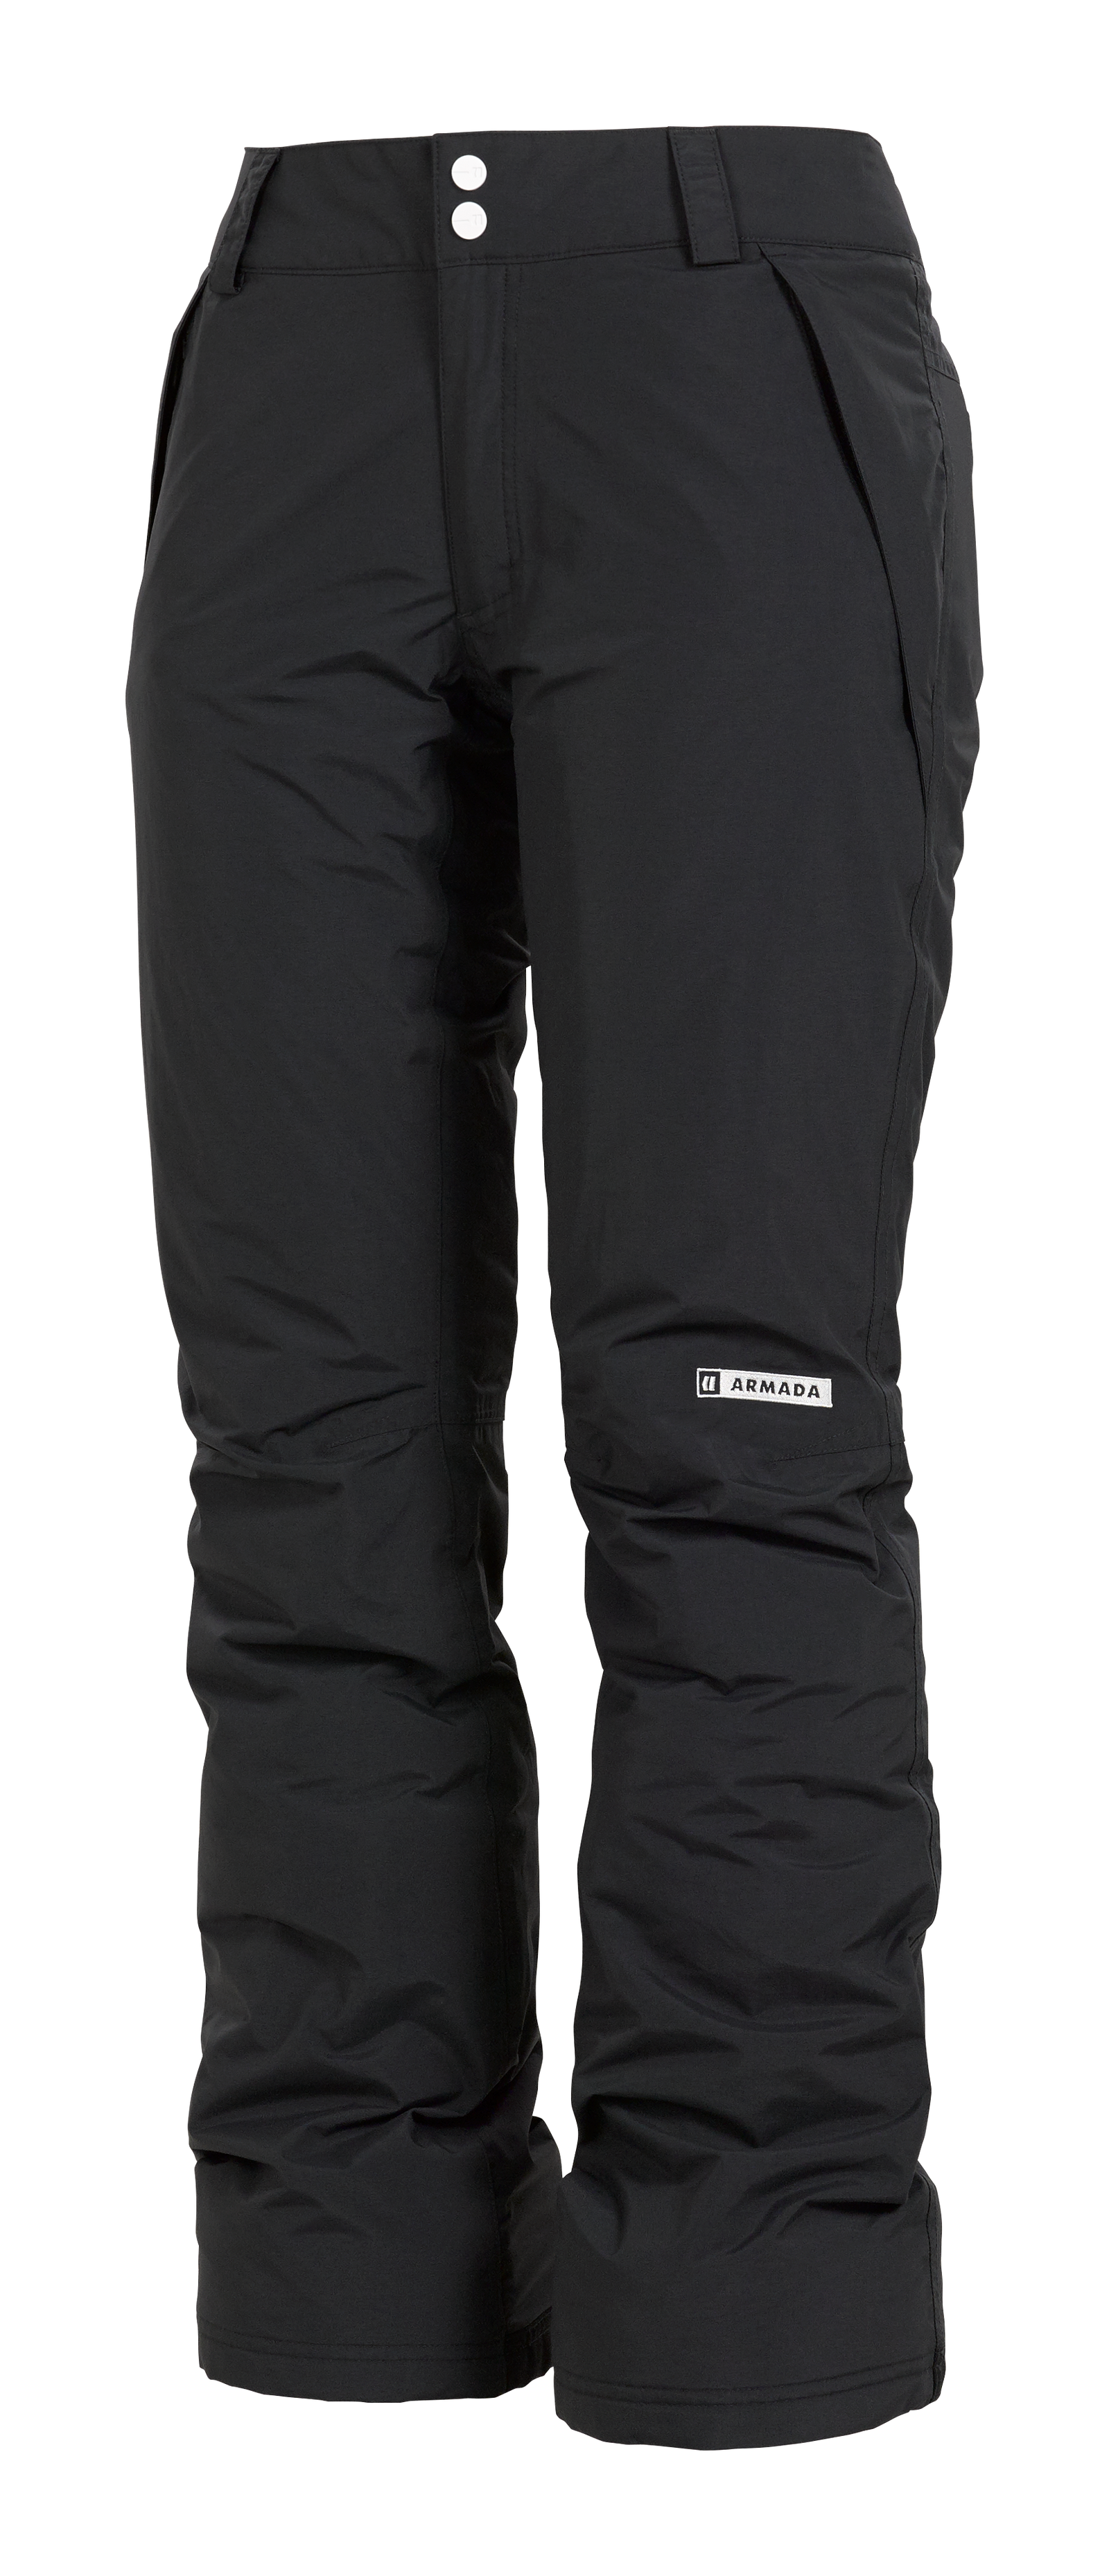 Buy WULFUL Women's Insulated Snow Ski Pants Waterproof Winter Snowboarding  Skiing Cargo Pants, Marina Blue, X-Small/32 Inseam at